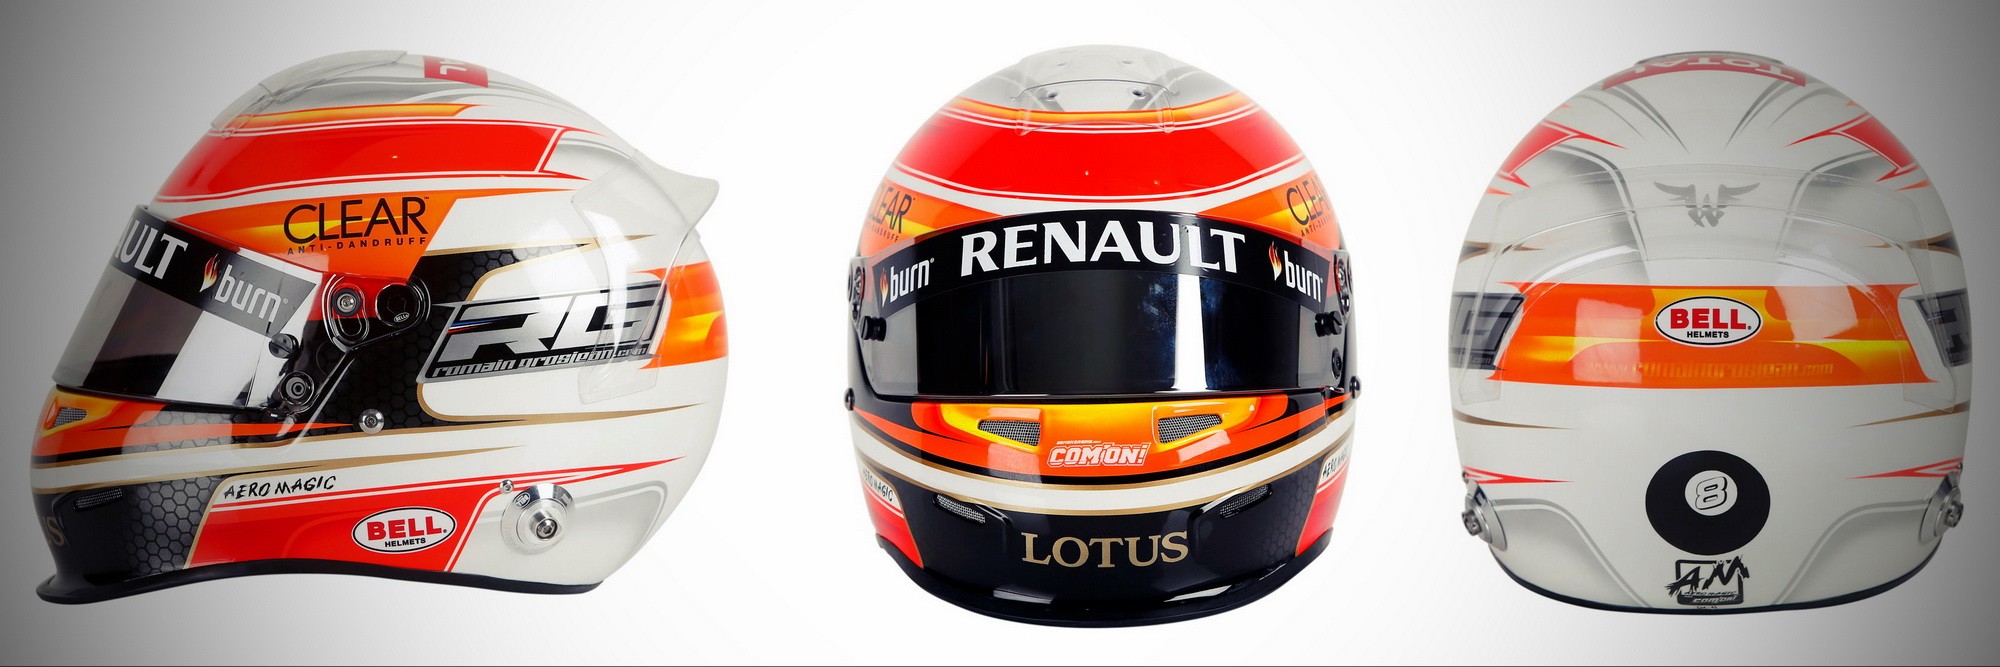 Шлем Романа Грожана на сезон 2013 года | 2013 helmet of Romain Grosjean